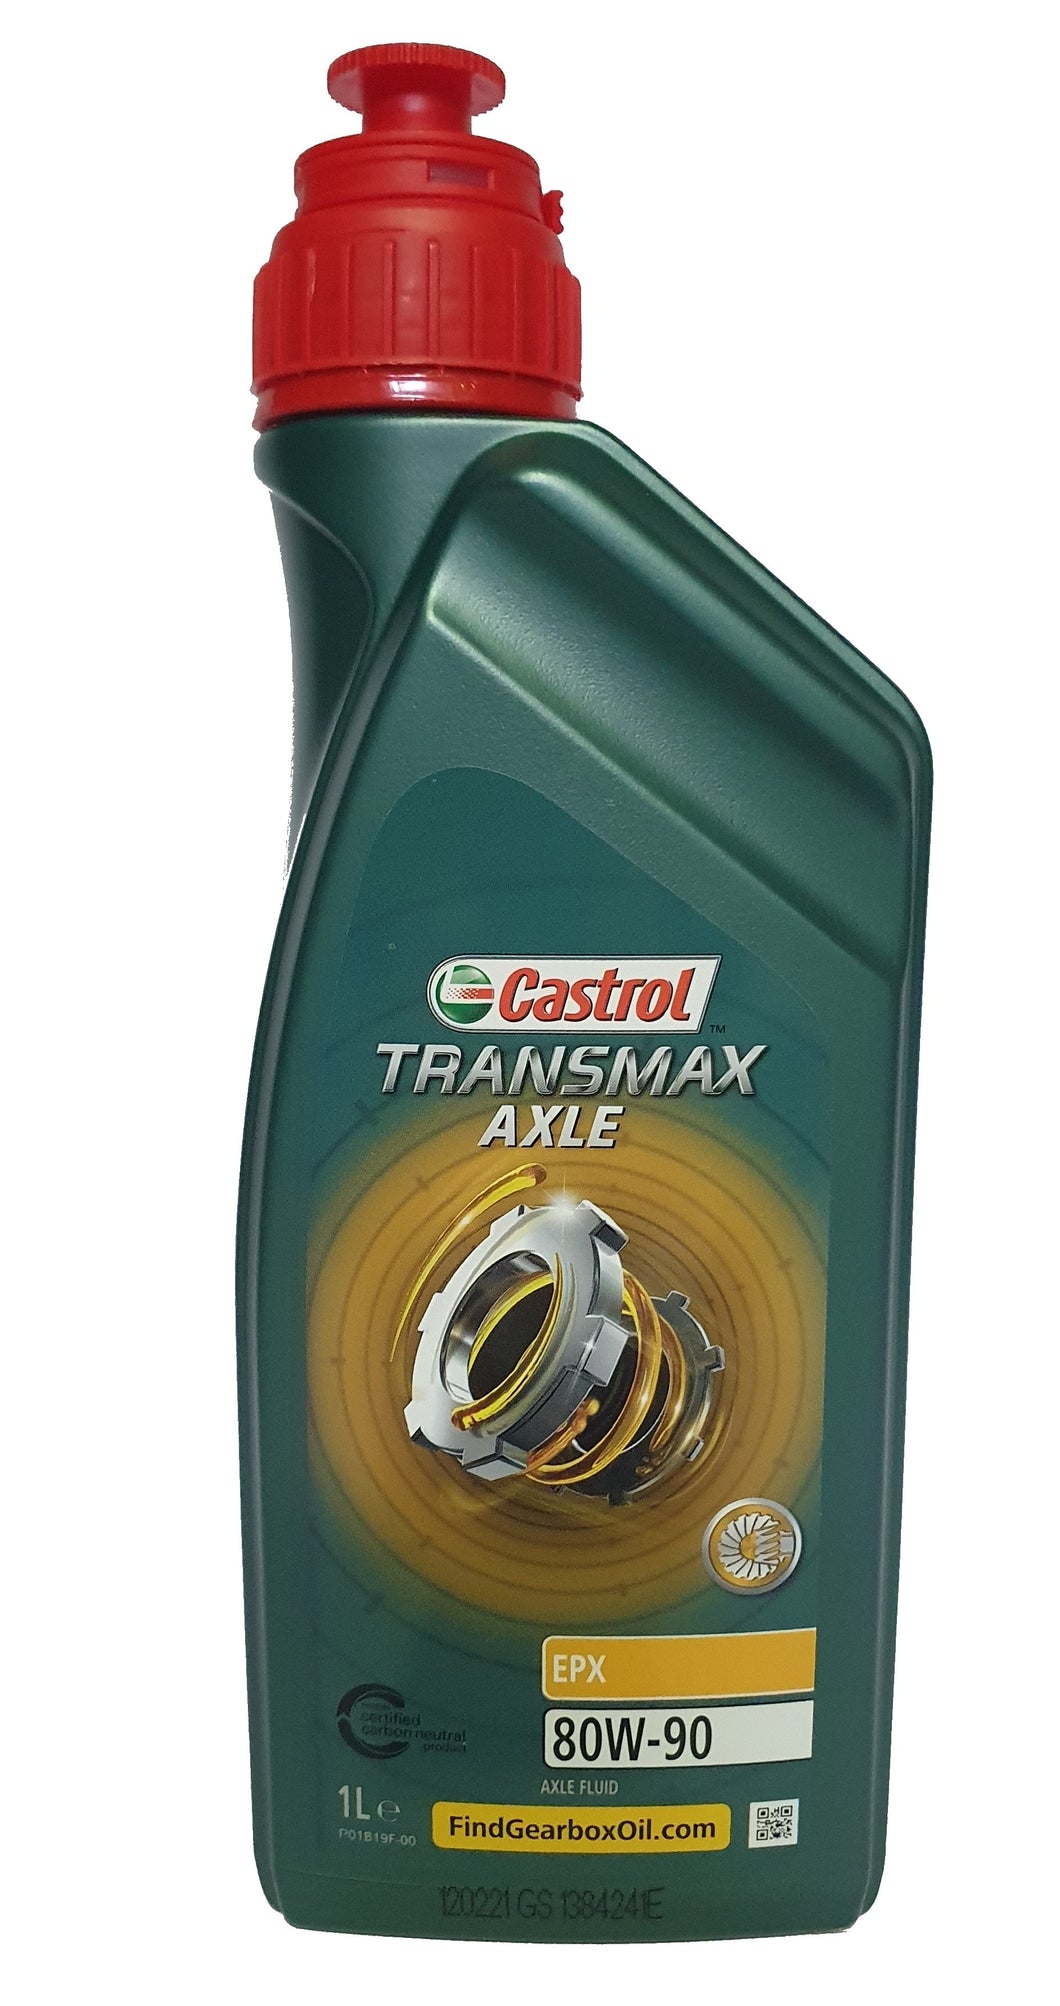 Castrol Transmax Axle EPX 80W90 - cartone 12 litri